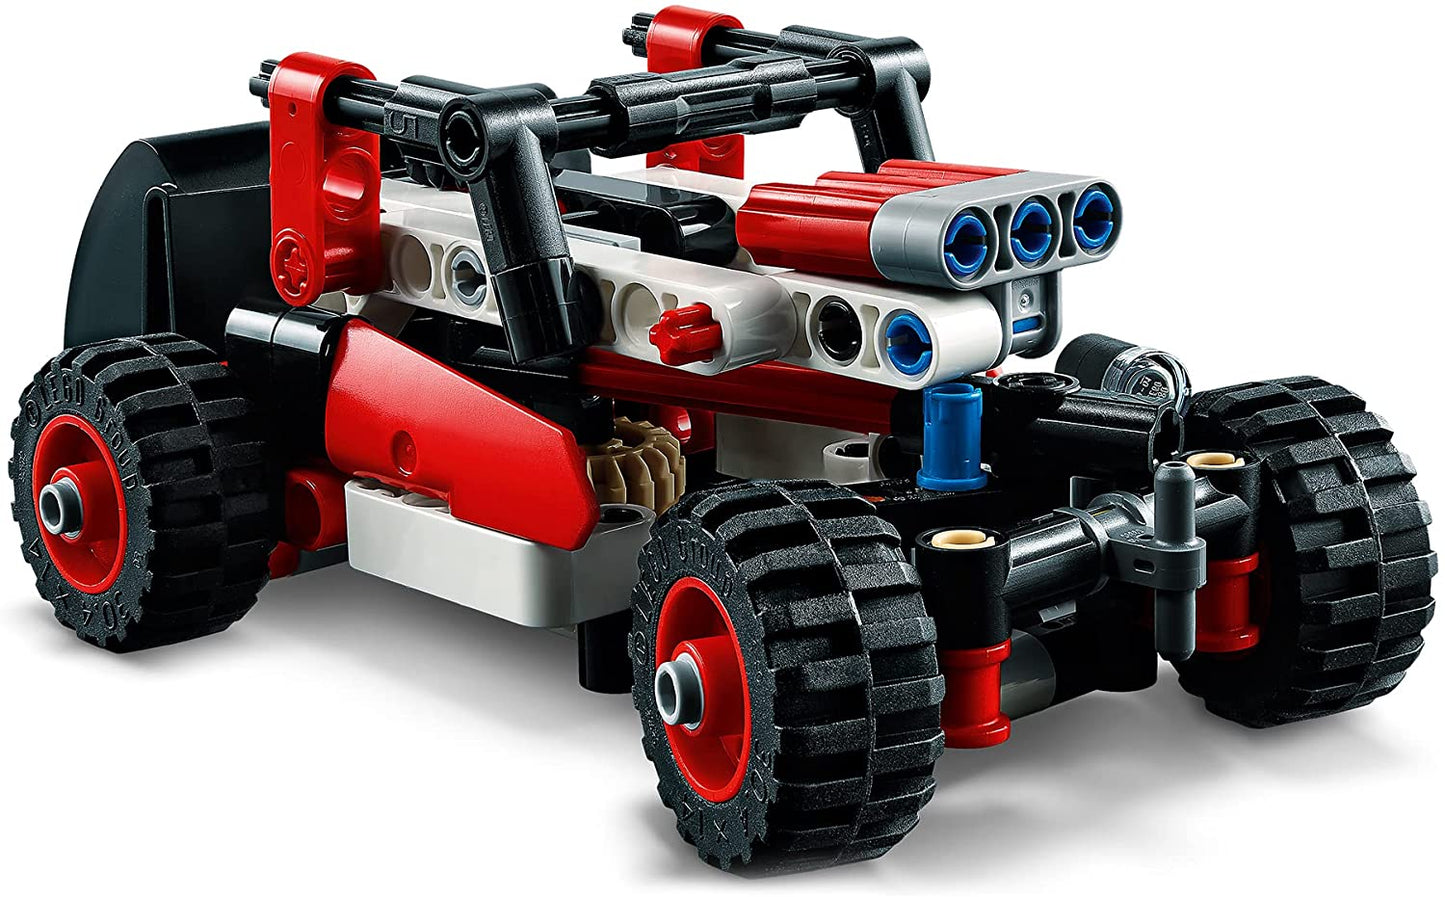 LEGO 42116 - Escavadeira de brinquedo Technic Skid Steer